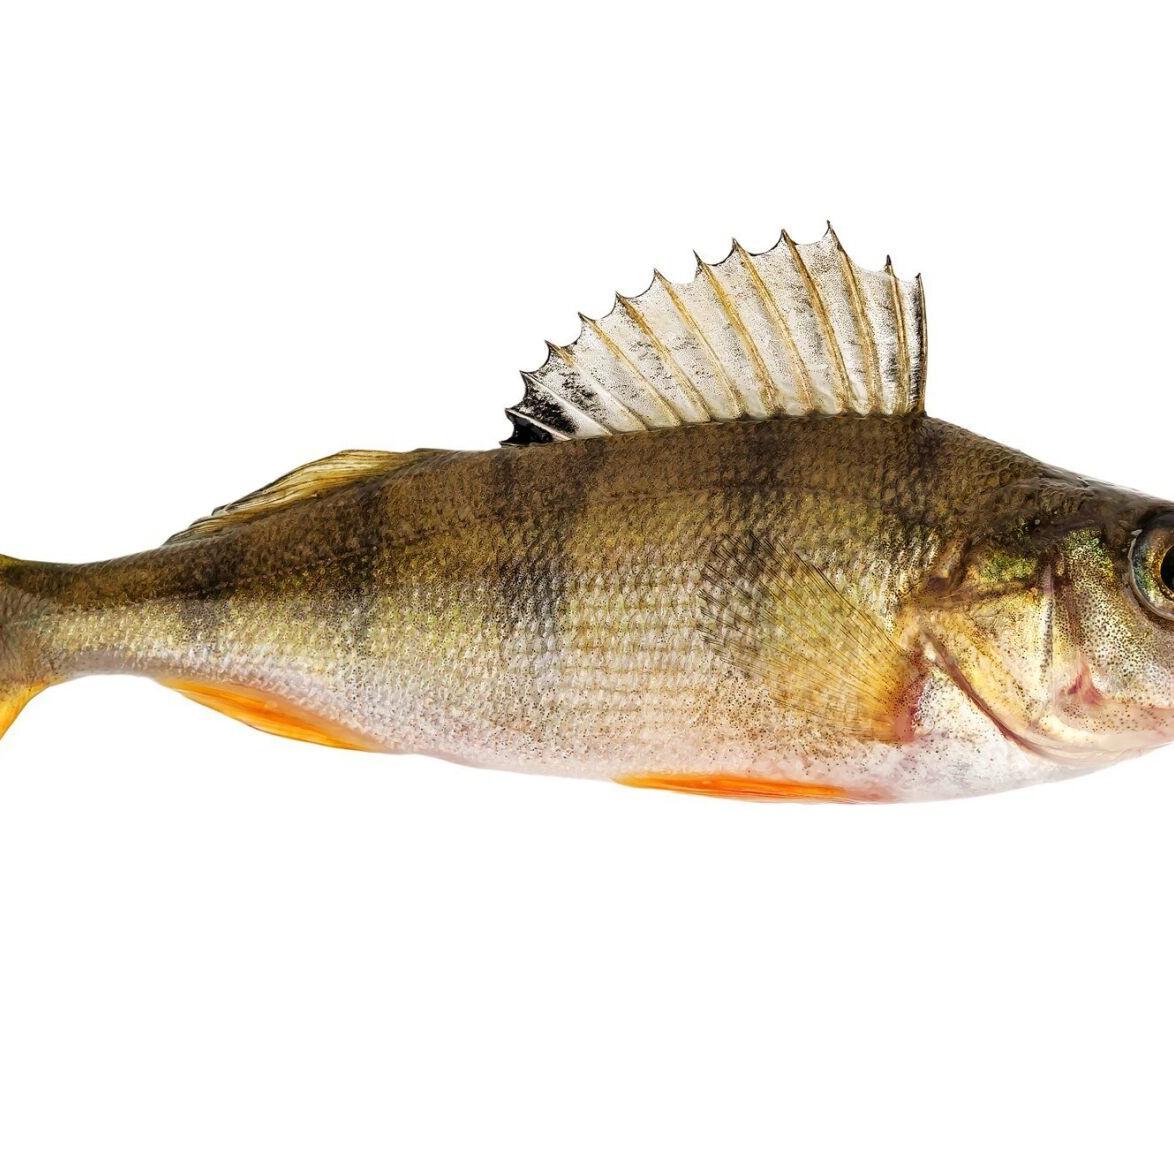 5 most common fish in lakes across Muskoka